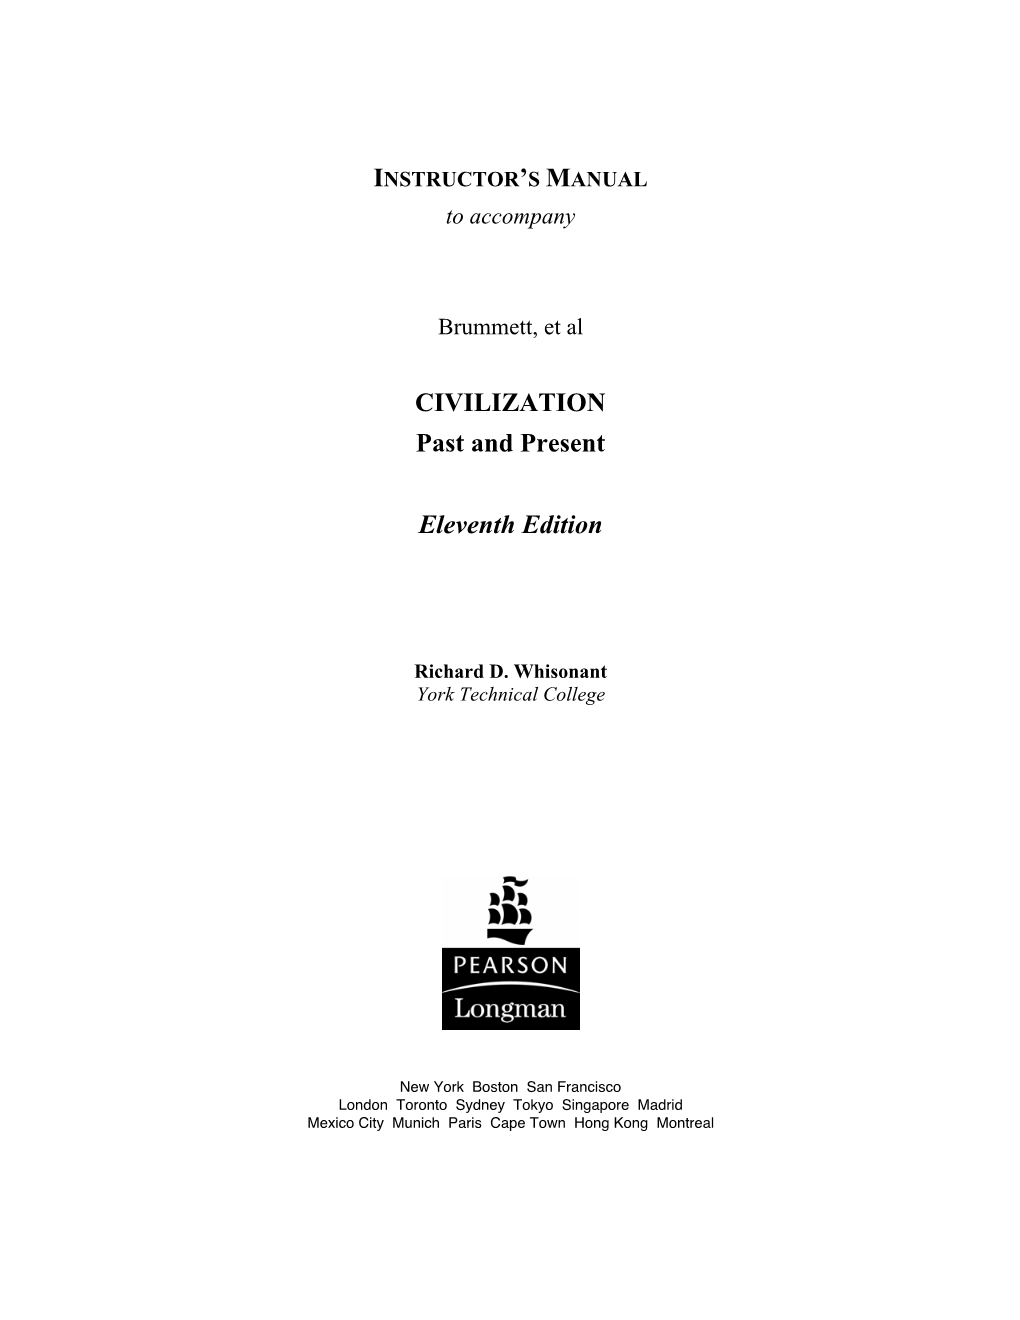 CIVILIZATION Past and Present Eleventh Edition